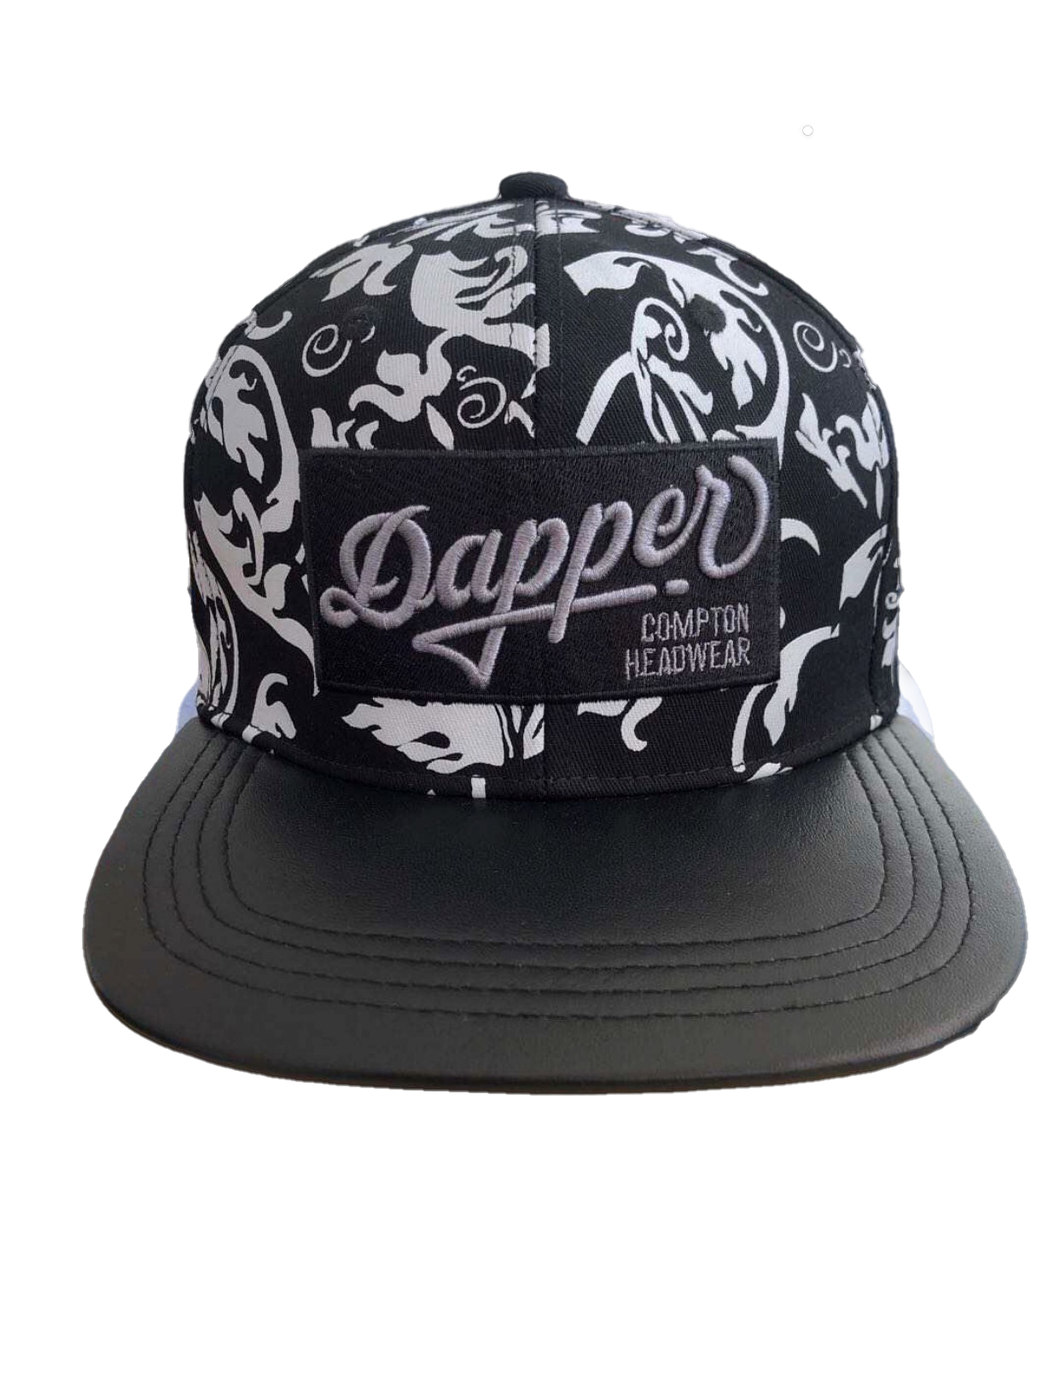 The Dapper Snapback Hat